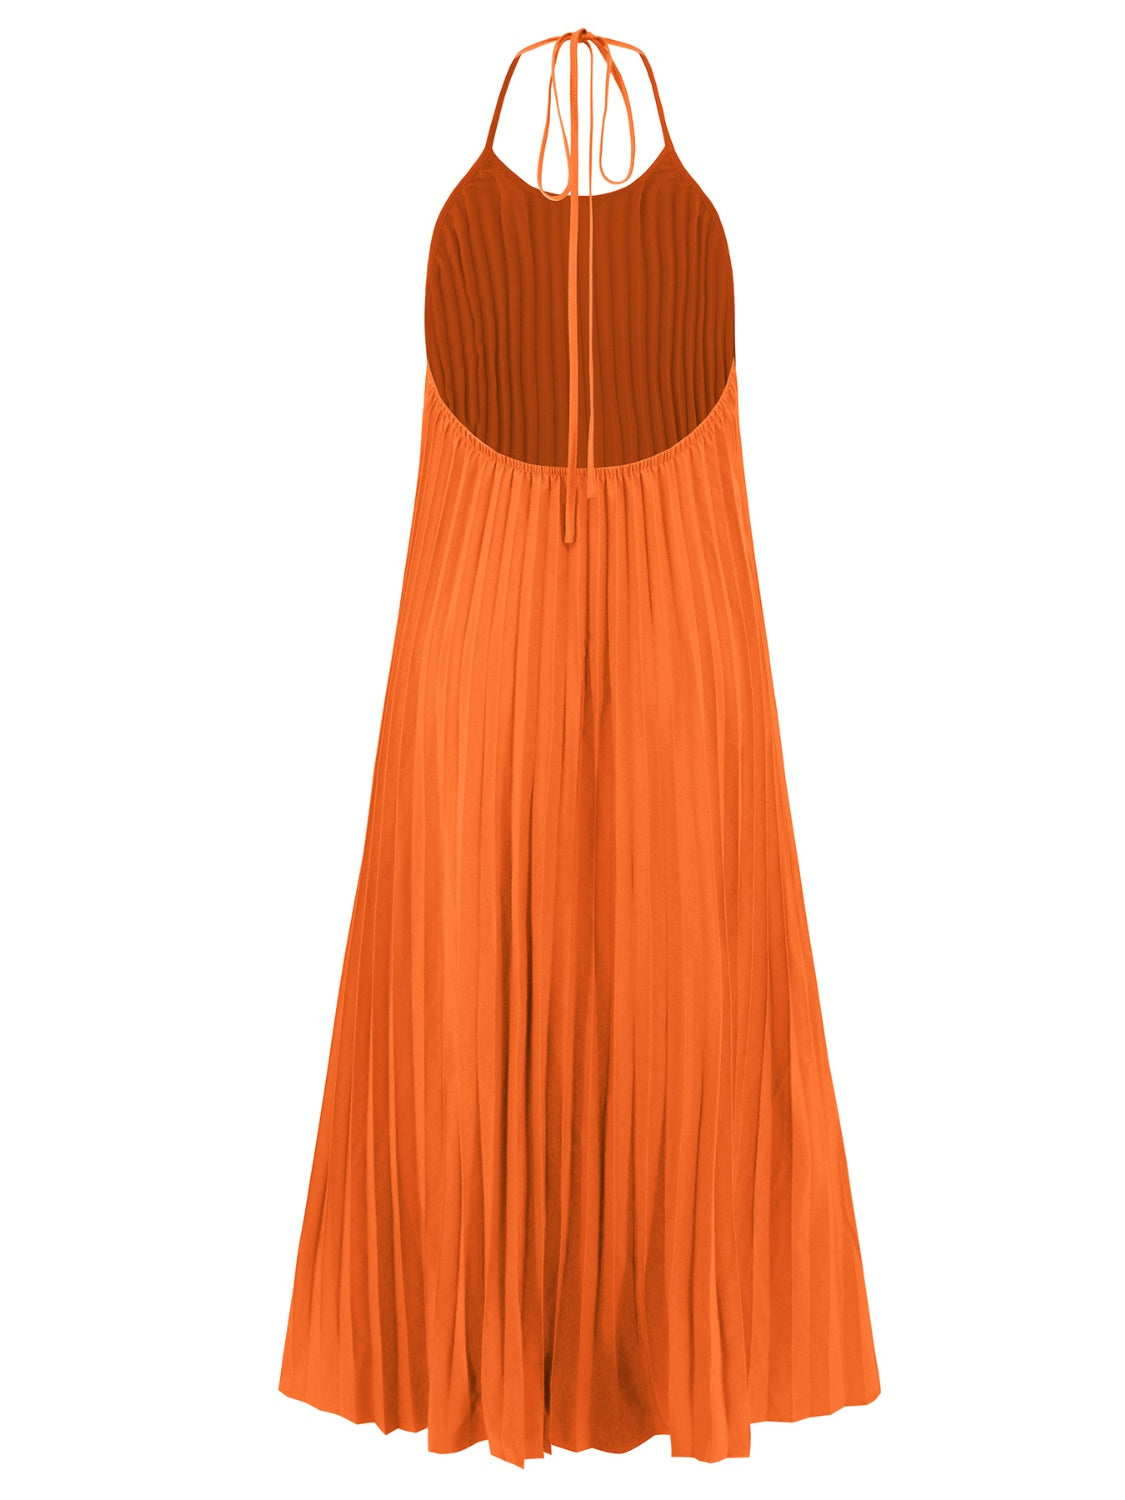 Pleated Halter Neck Sleeveless Dress - House of Binx 